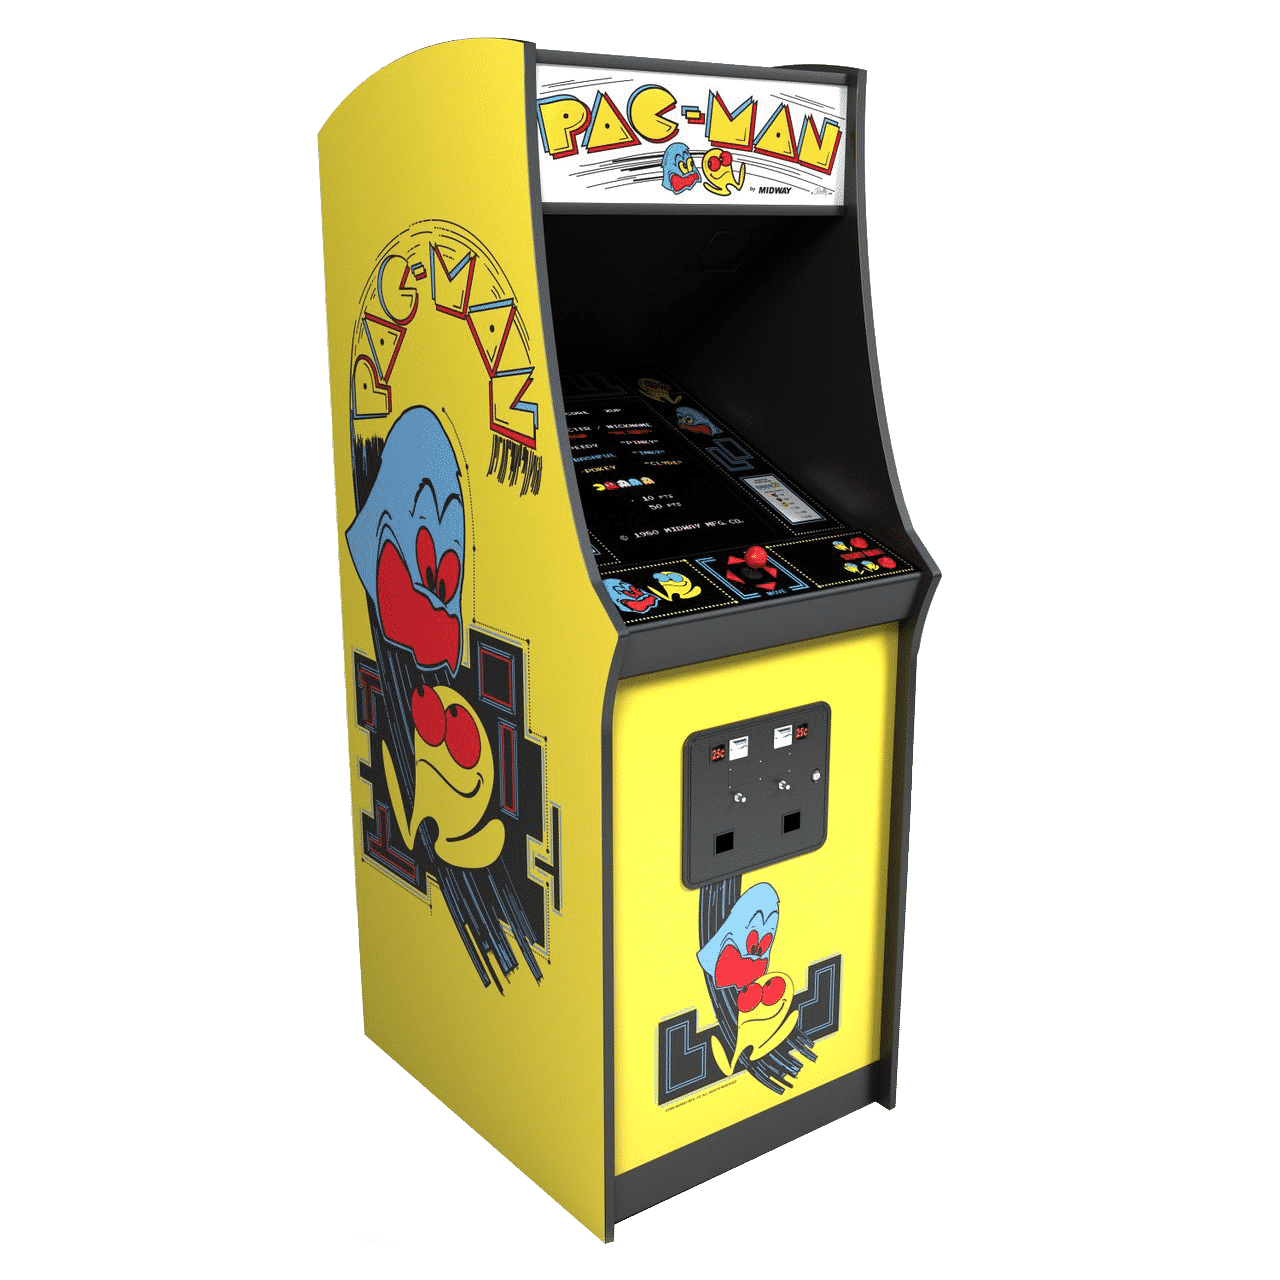 The original pac-man arcade cabinet